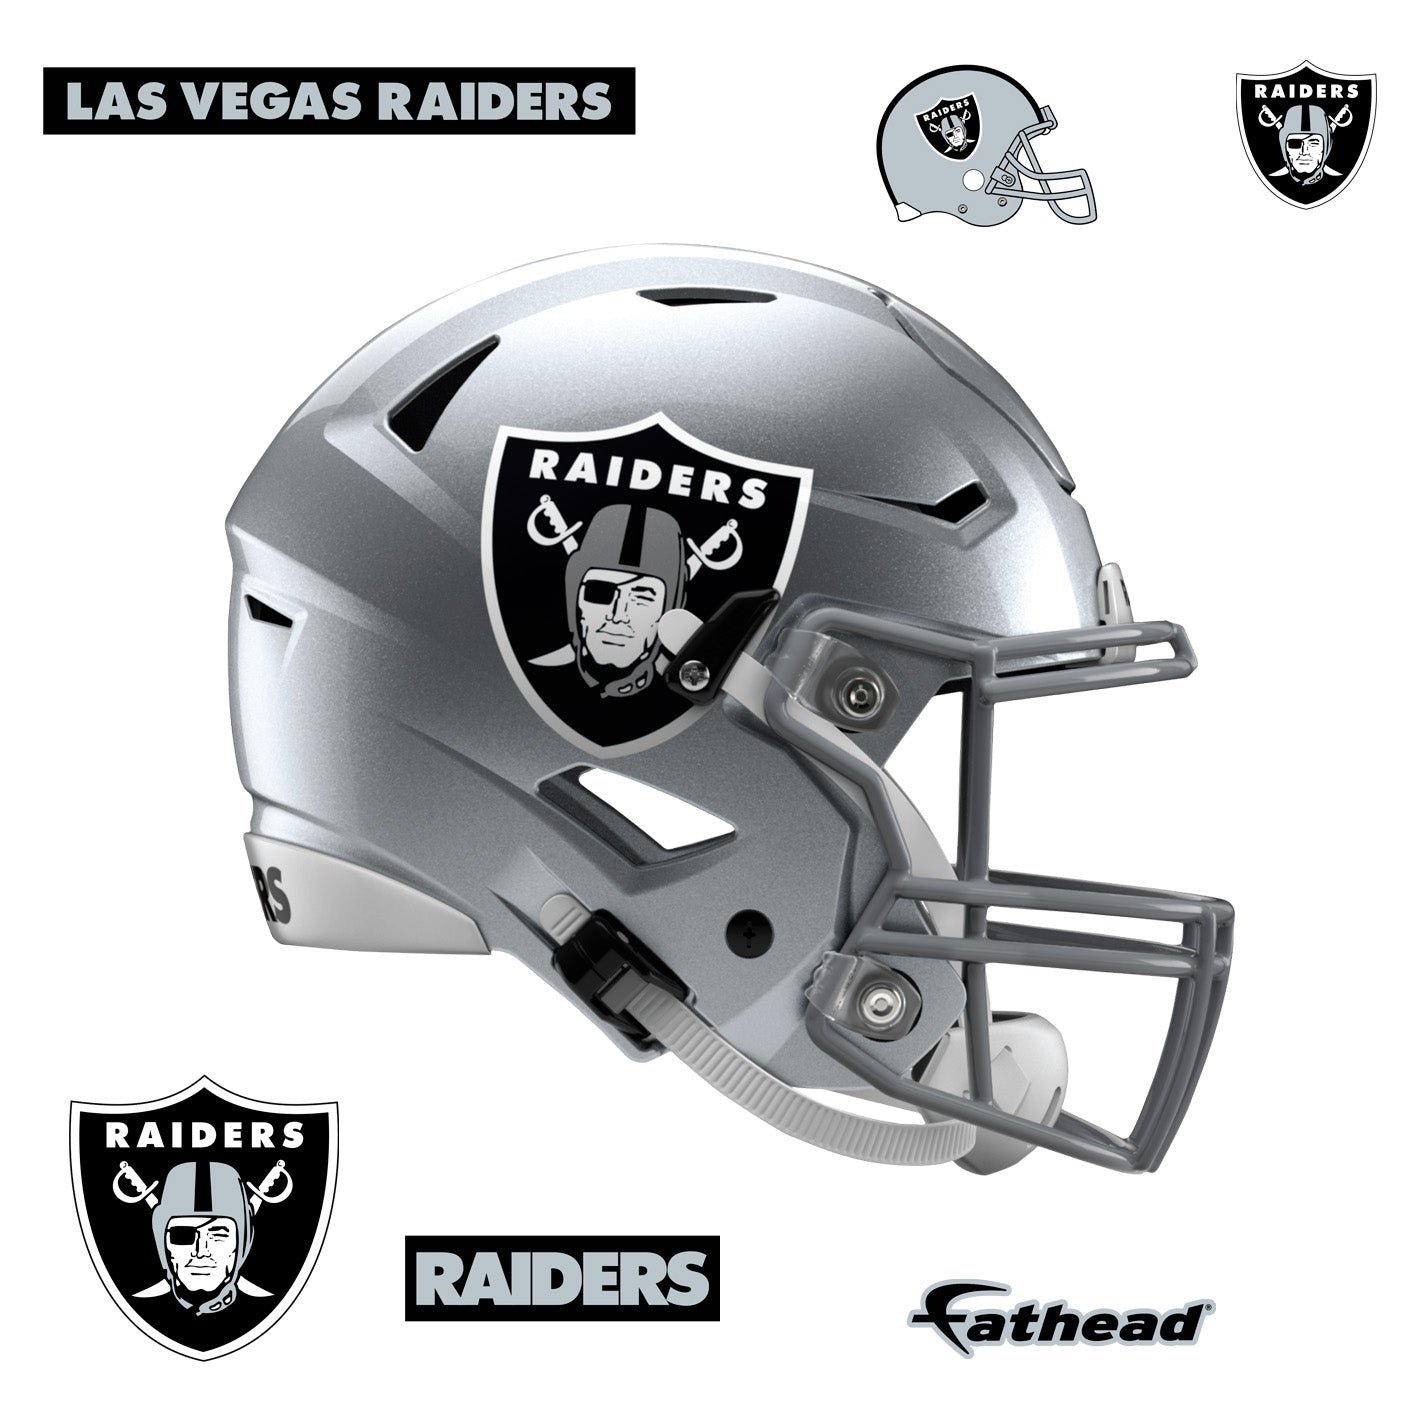 Las Vegas Raiders Helmet Decal Approx 4.5 x 3.5 inches